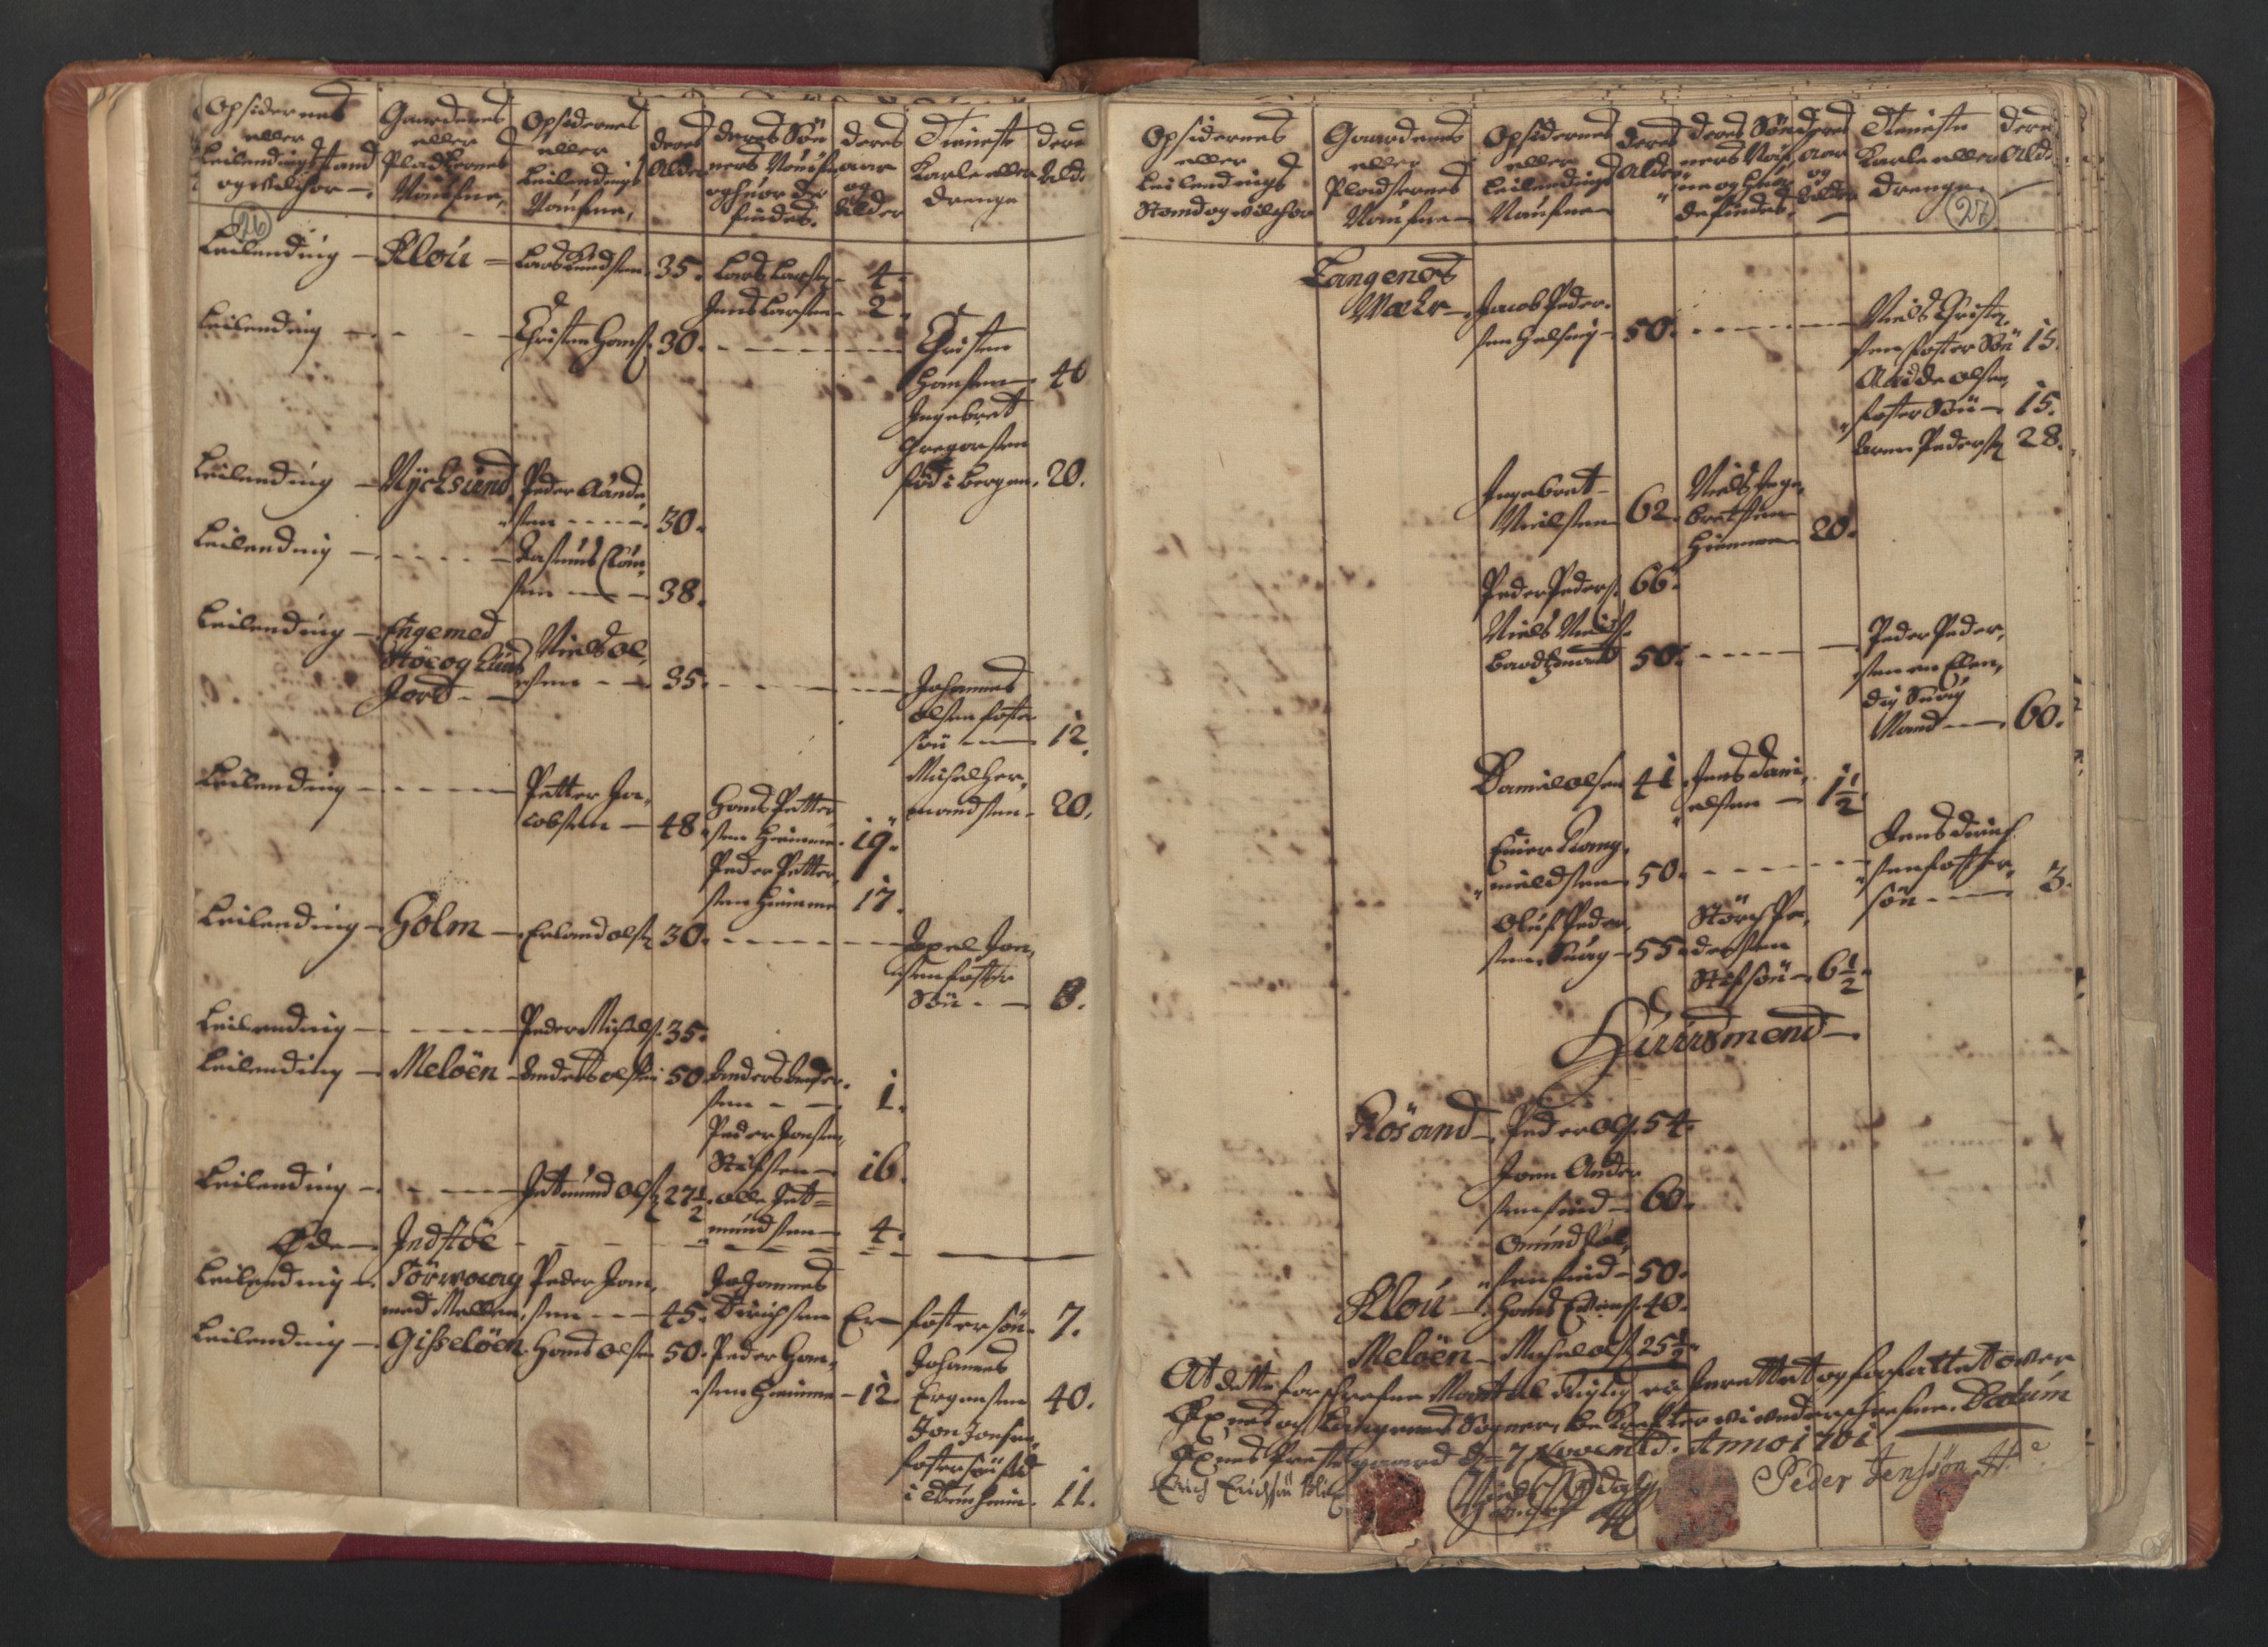 RA, Manntallet 1701, nr. 18: Vesterålen, Andenes og Lofoten fogderi, 1701, s. 26-27